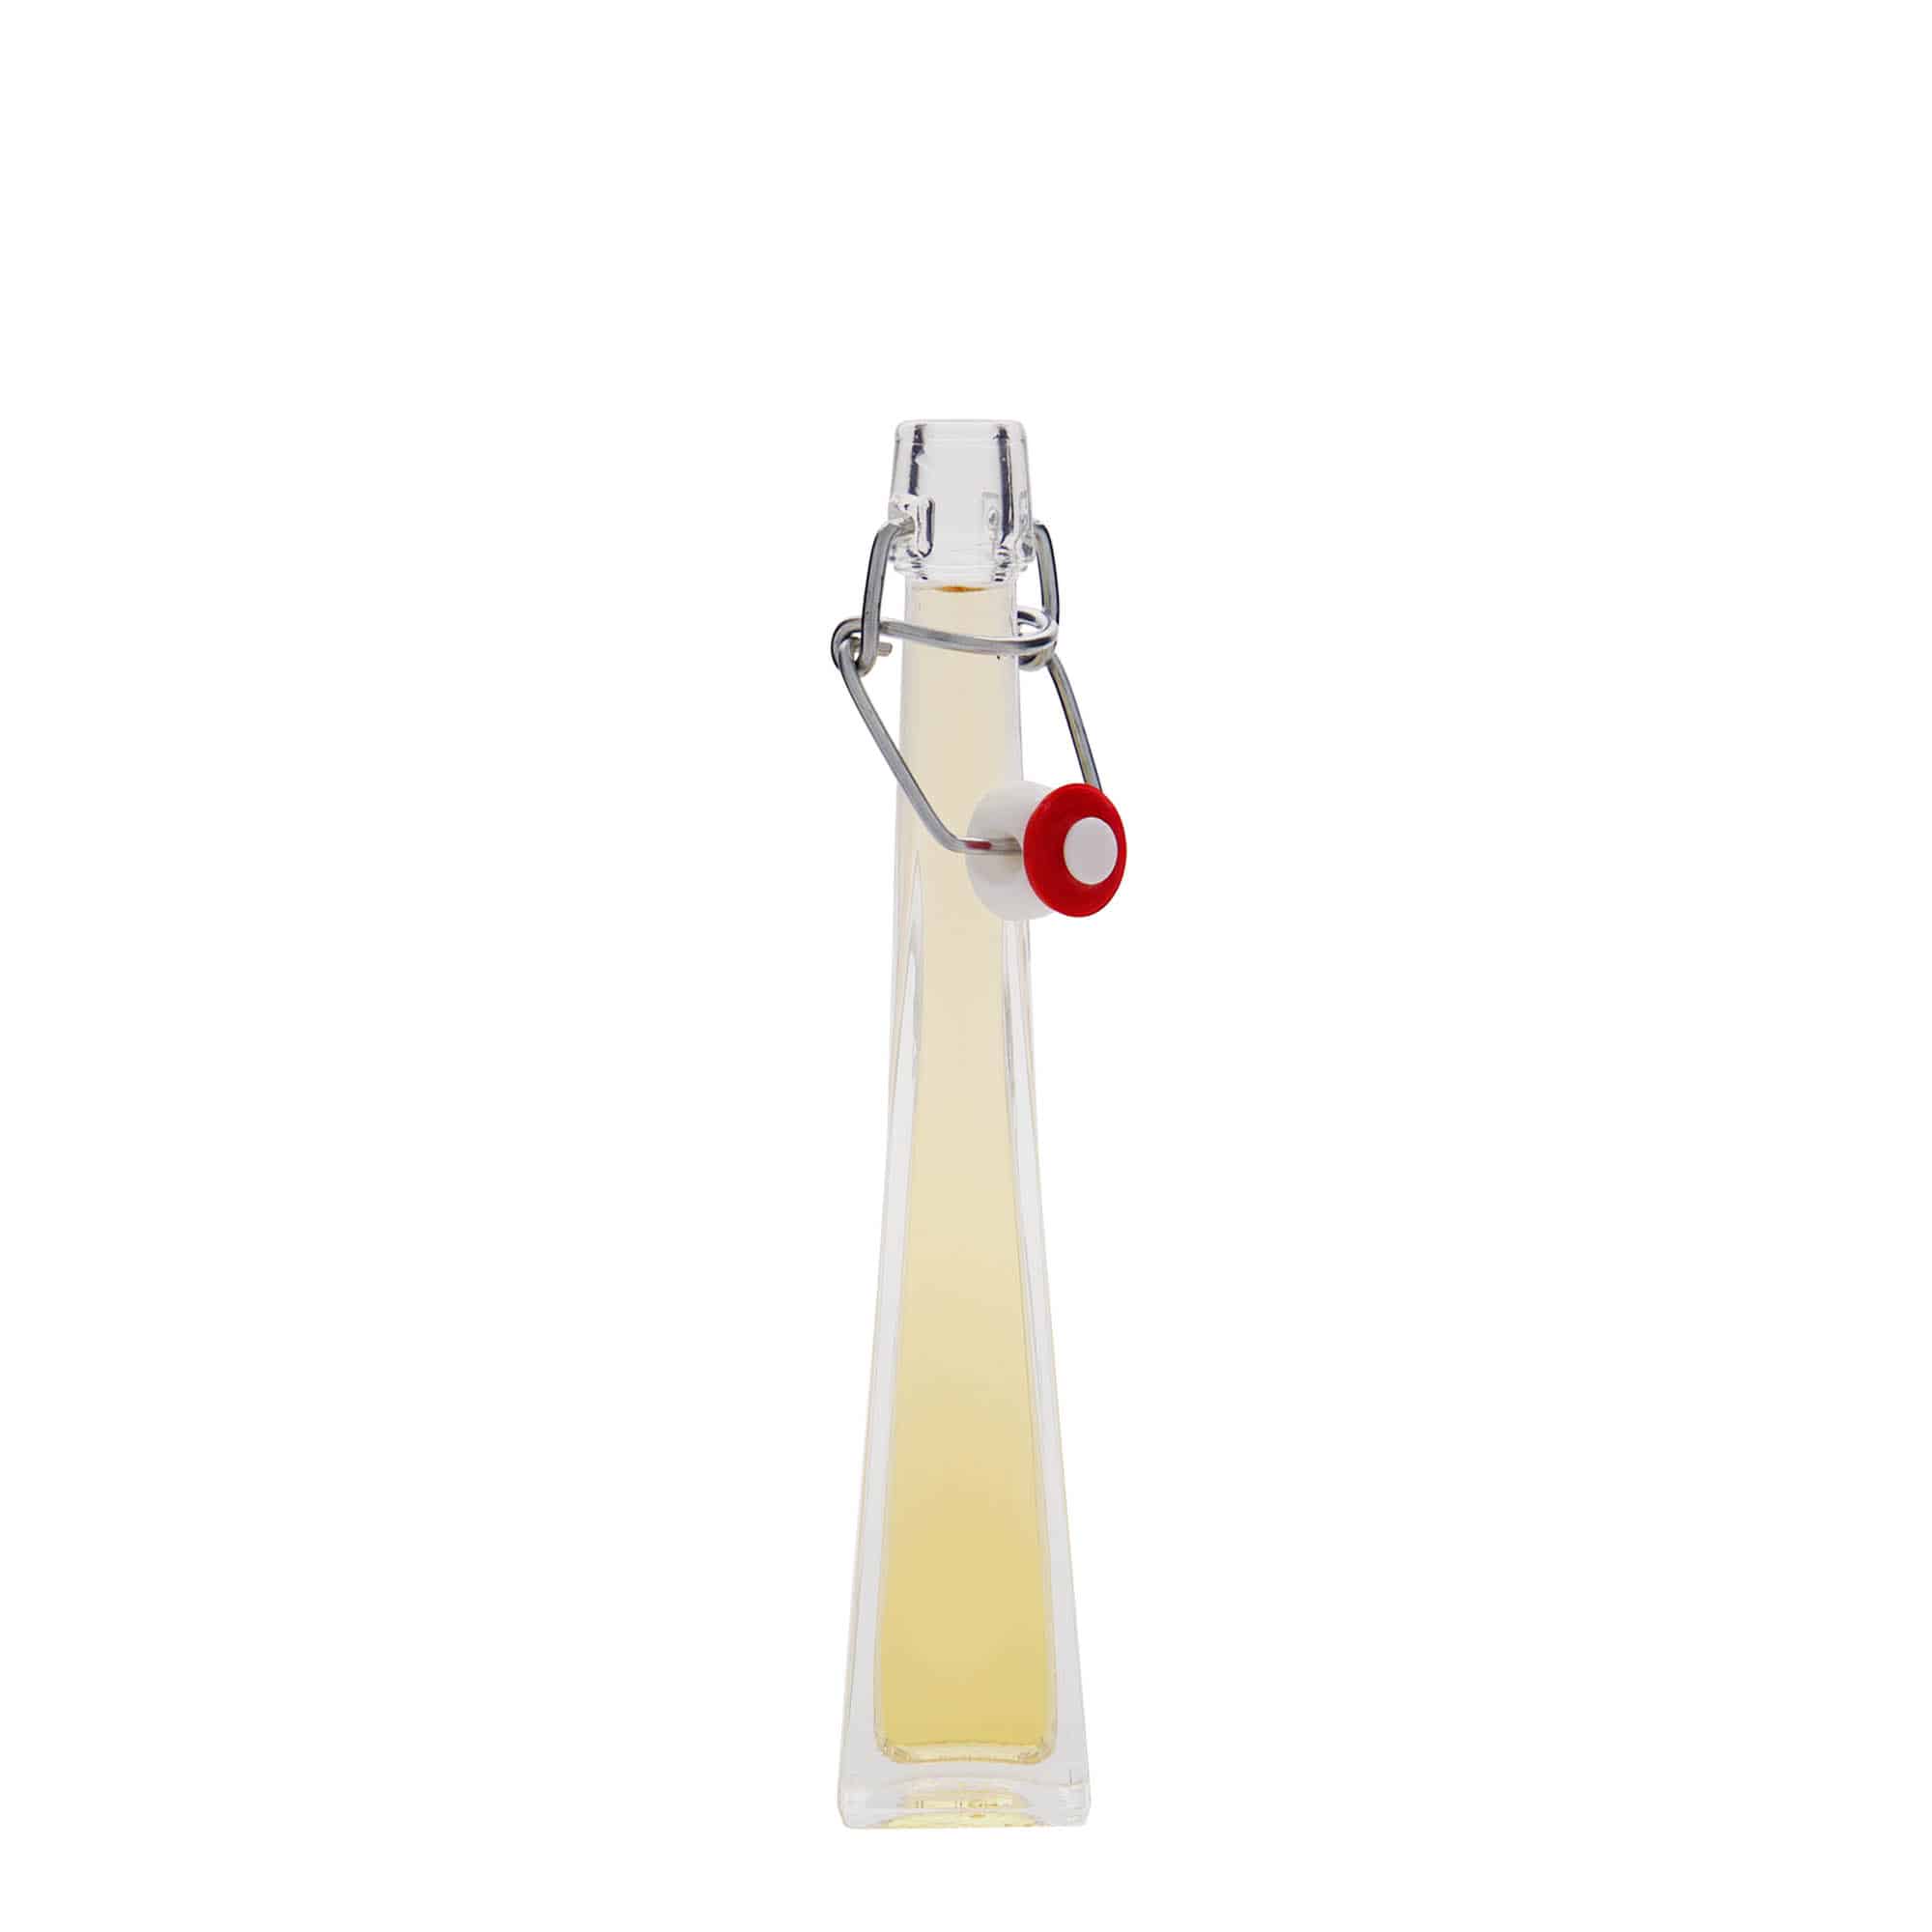 40 ml glasflaske 'Dama Quadrato', kvadratisk, åbning: Patentlåg